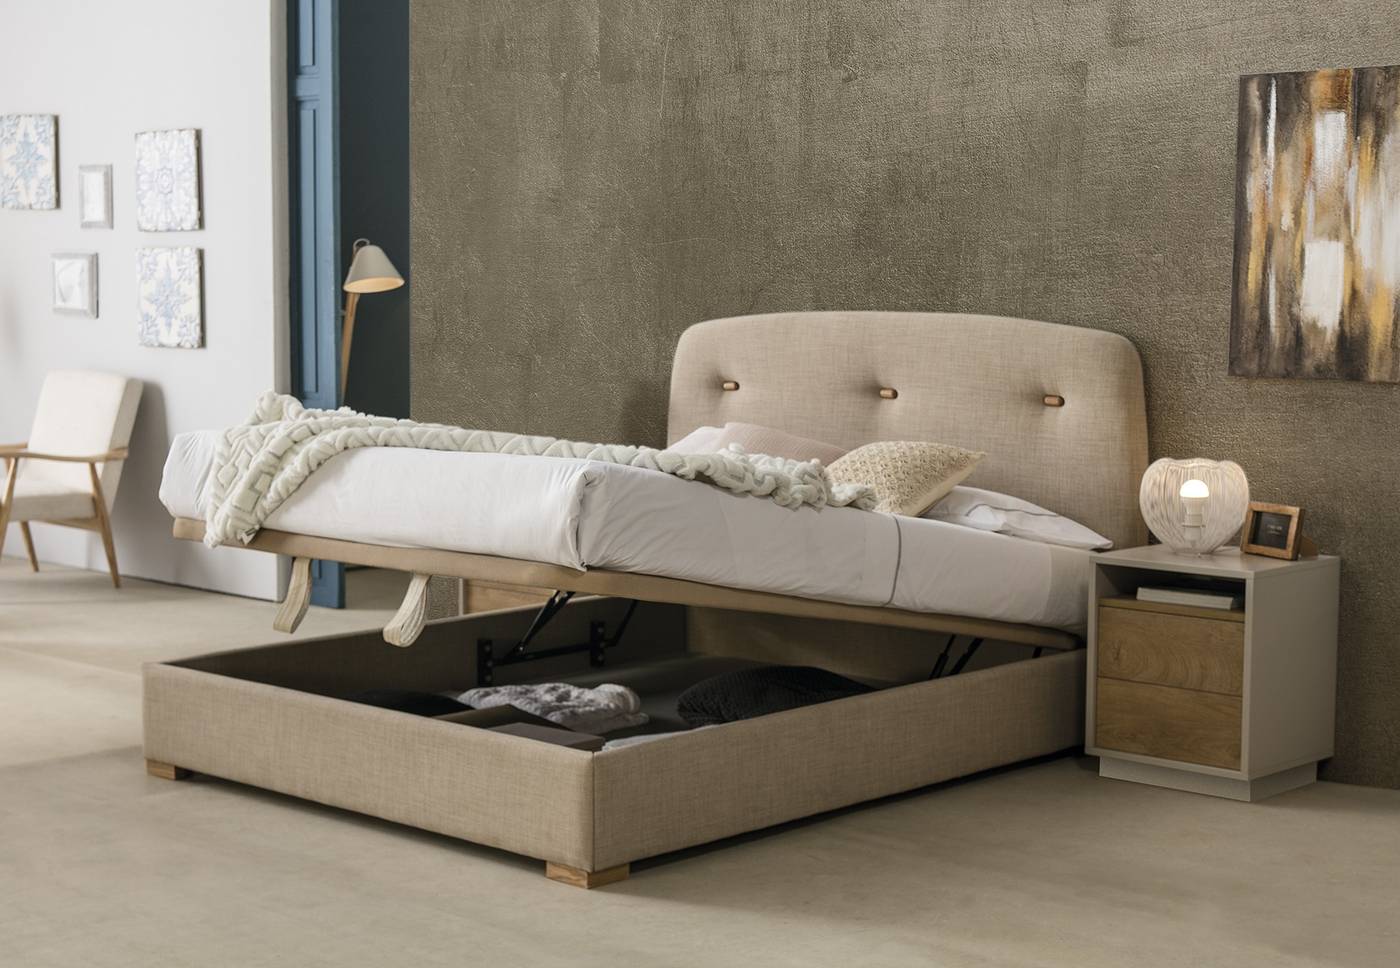 Cama con canapé abatible tapizado en polipiel, tela o terciopelo, para cama de 150, 160 o 180 cm. Disponible en varios colores.